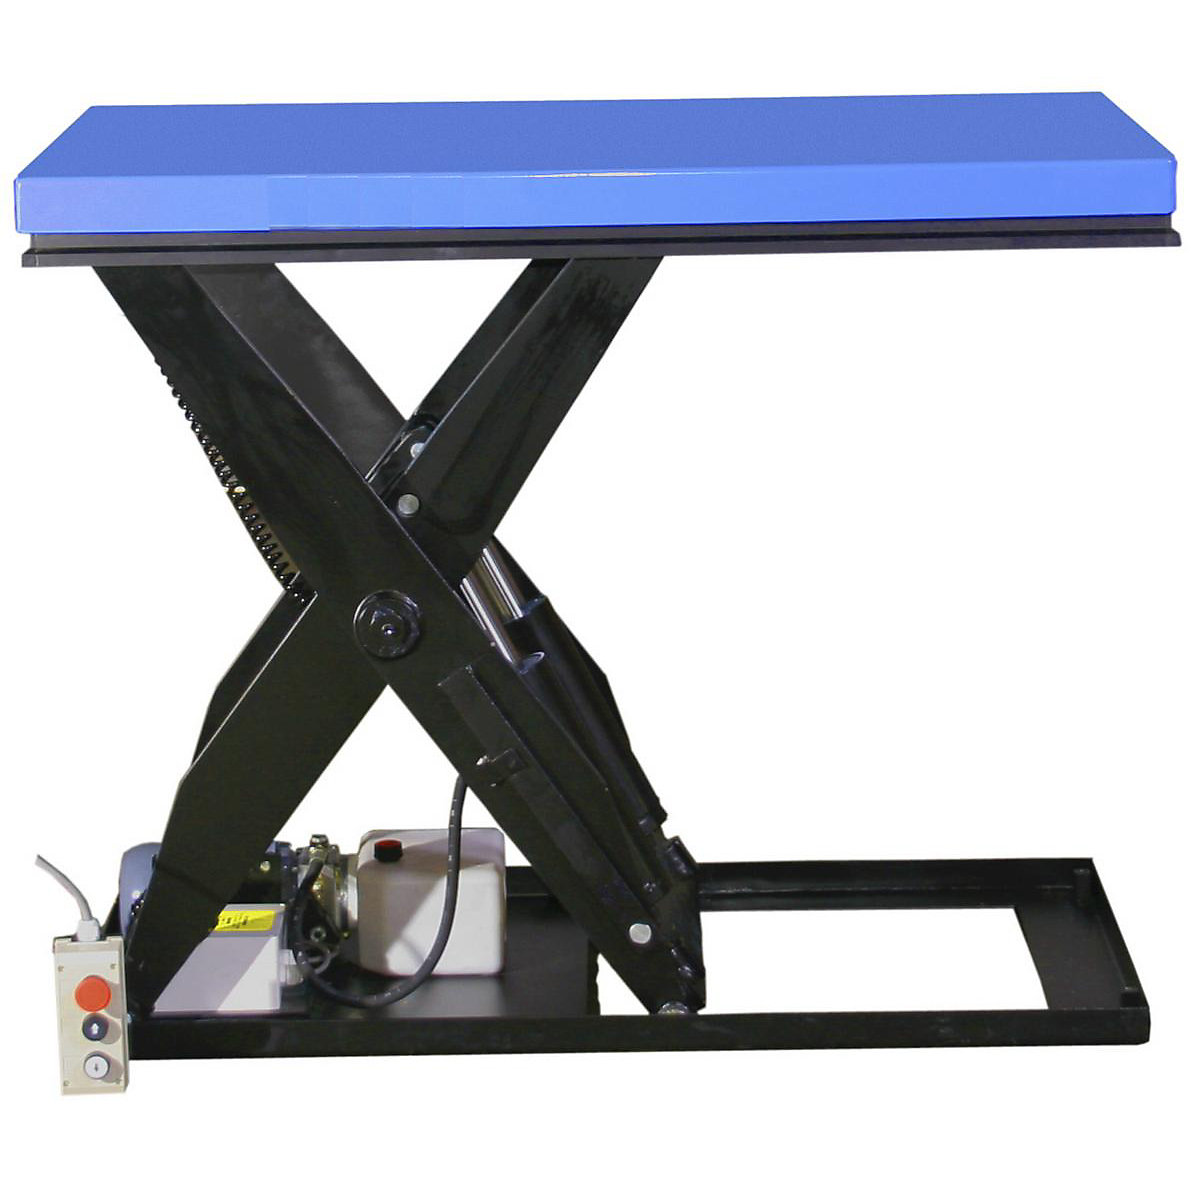 Compact lift table, platform LxW 1300 x 800 mm, max. load 500 kg, operating voltage 230 V